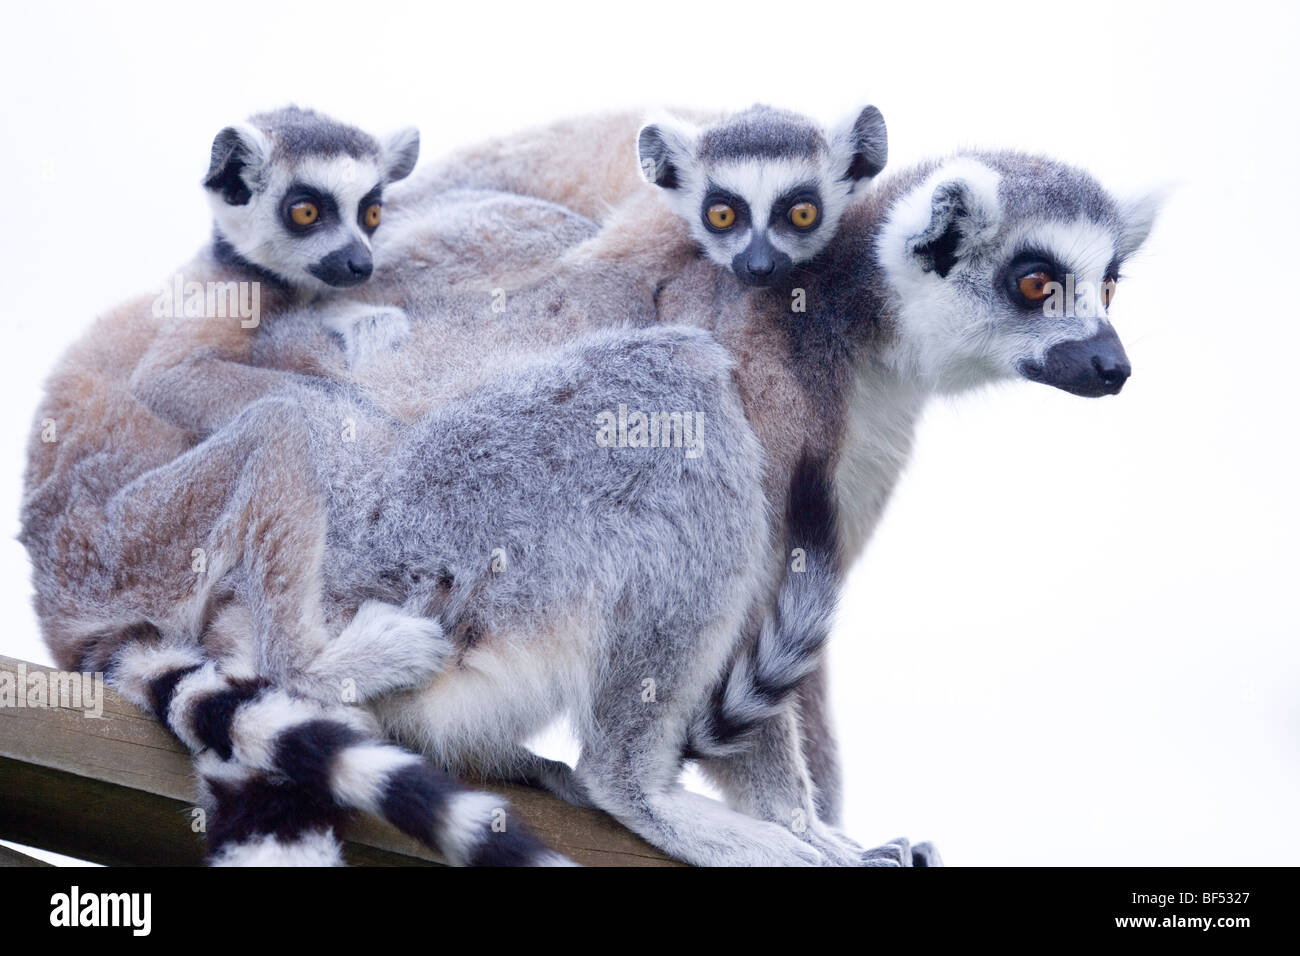 Anello-tailed Lemur (Lemur catta). Femmina doppia porta bebè. Foto Stock